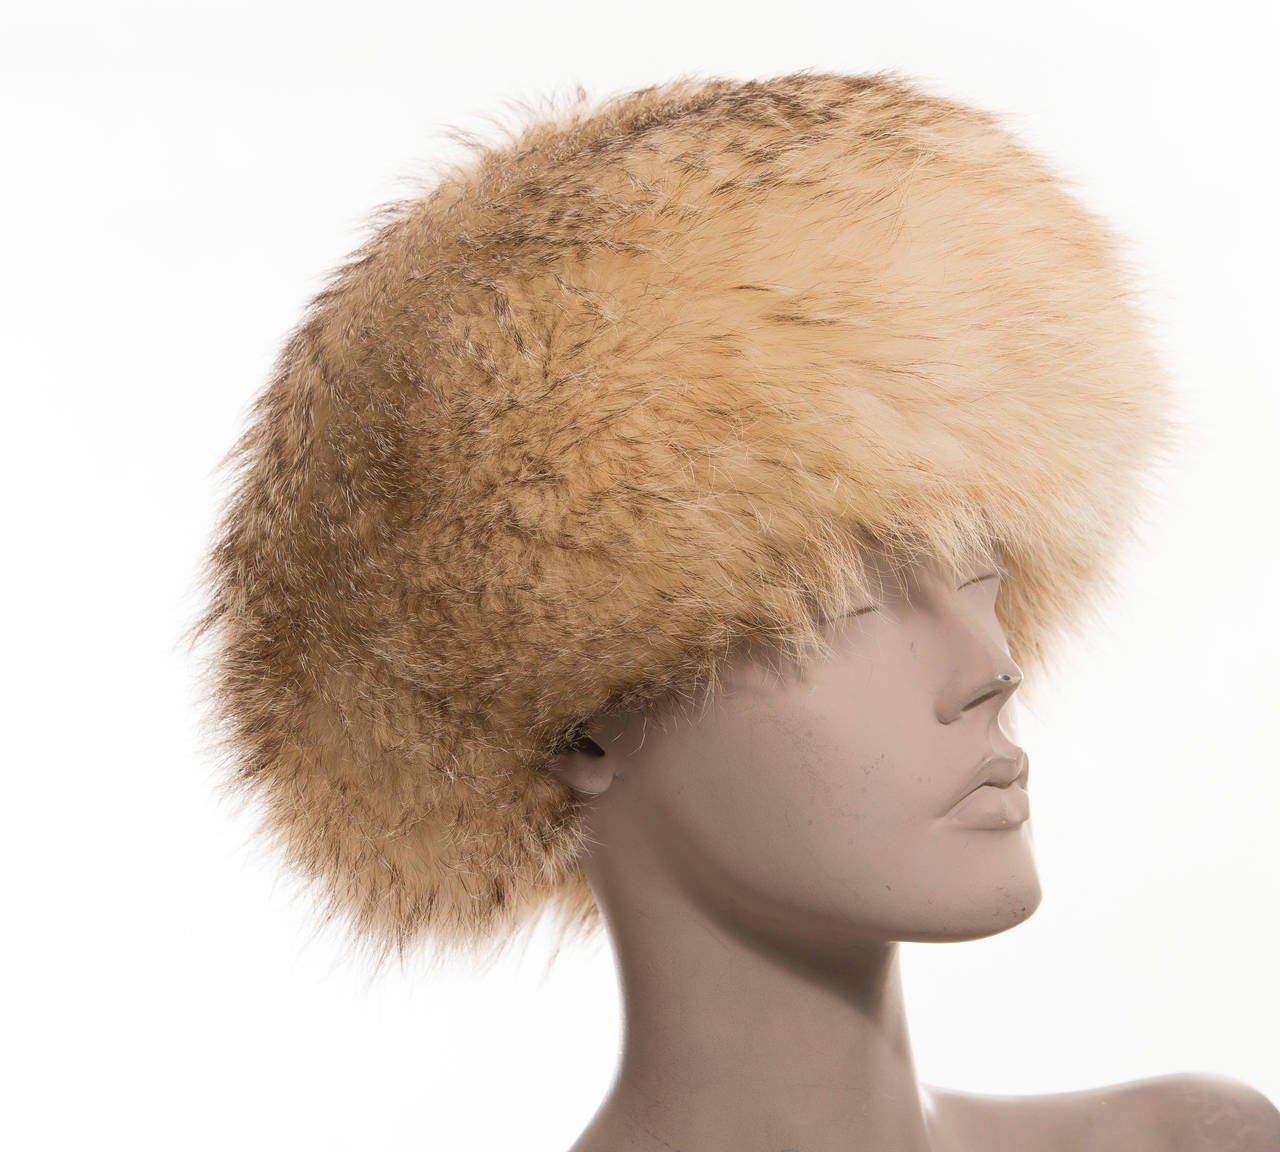 Fabiani 1960s fur hat

Circumference: 24.5 inches